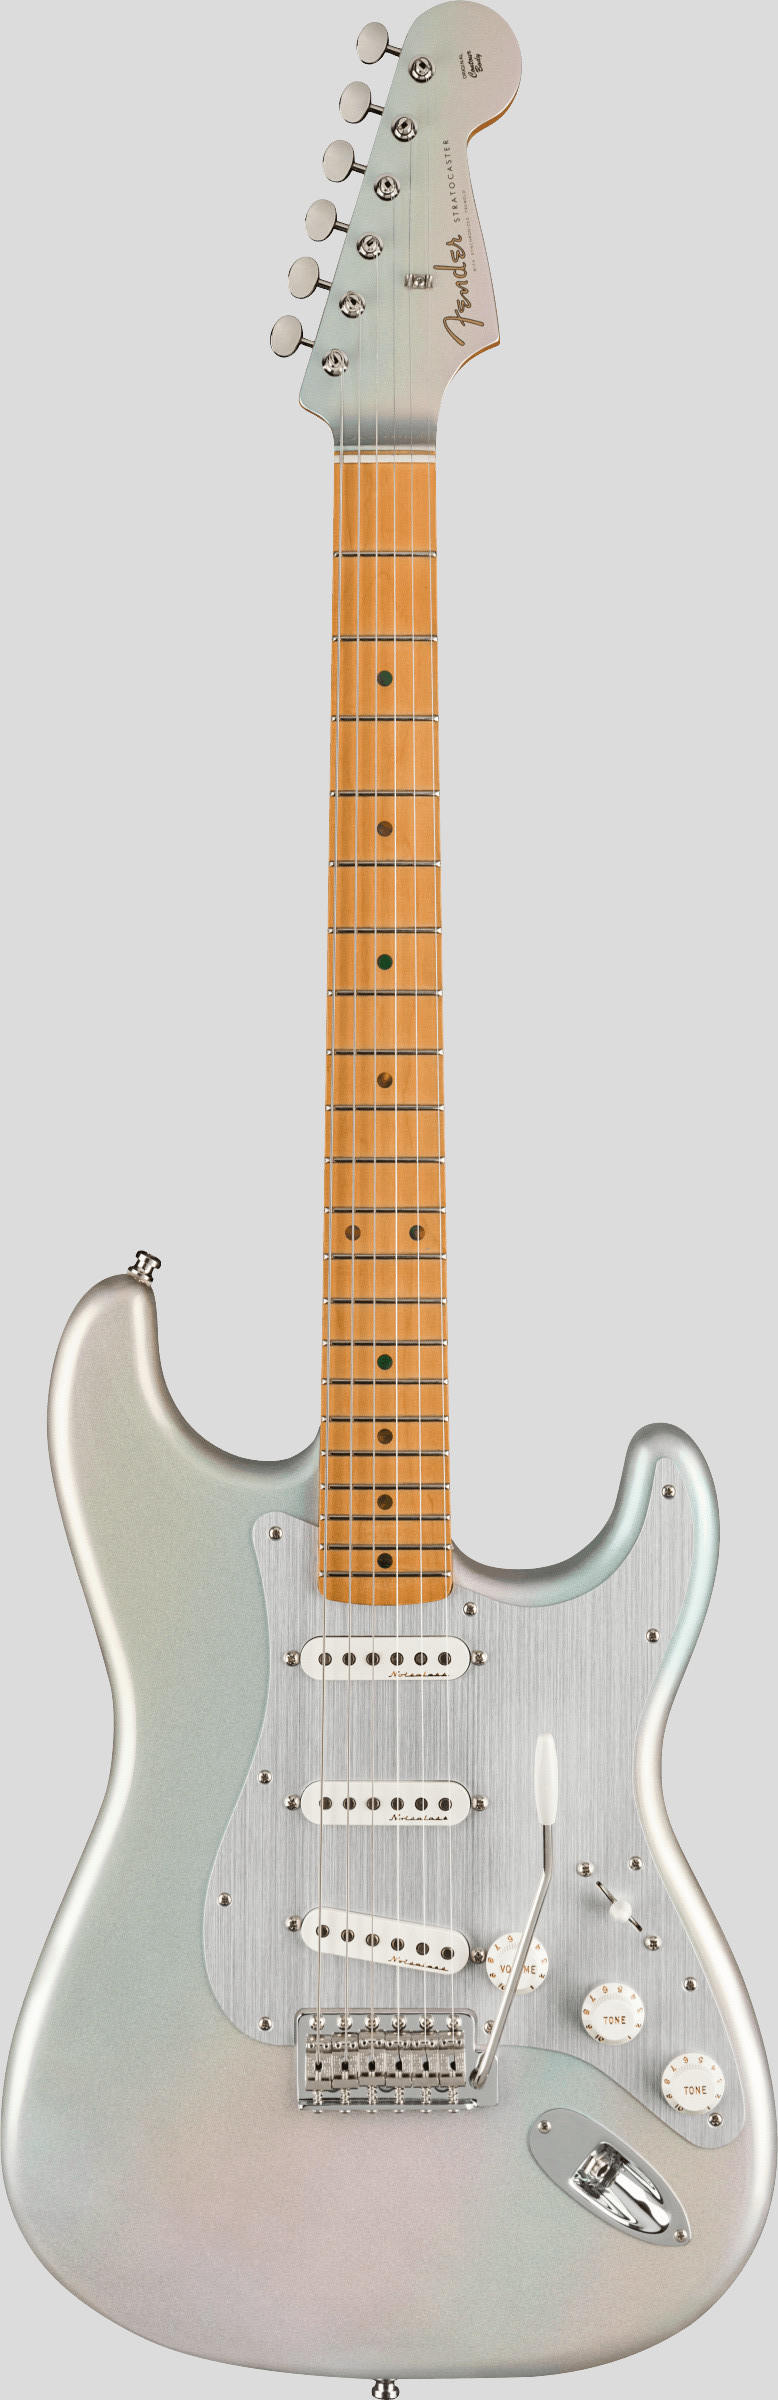 Fender HER Stratocaster Chrome Glow 1